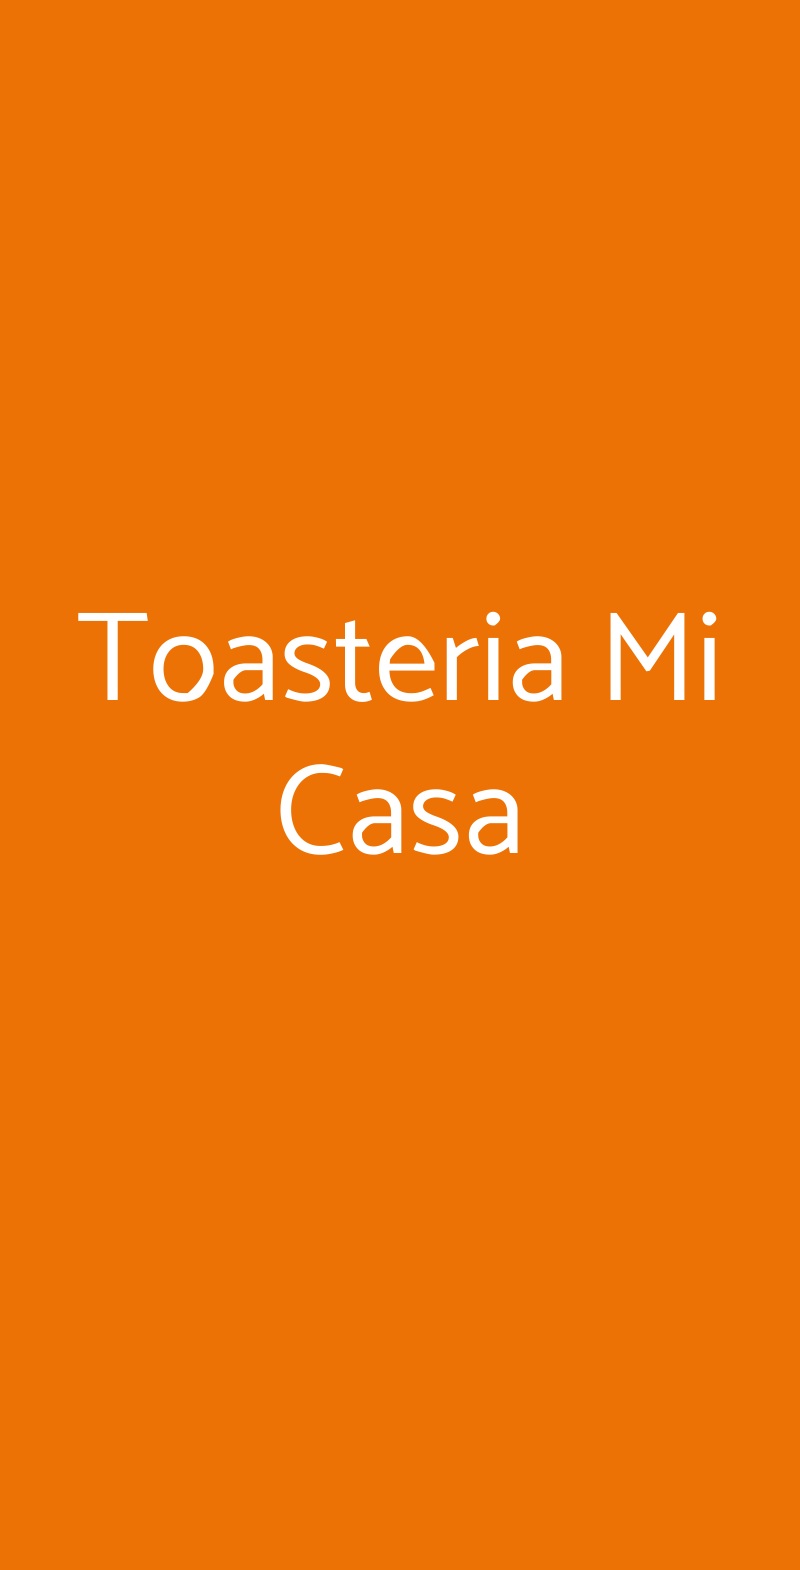 Toasteria Mi Casa Milano menù 1 pagina